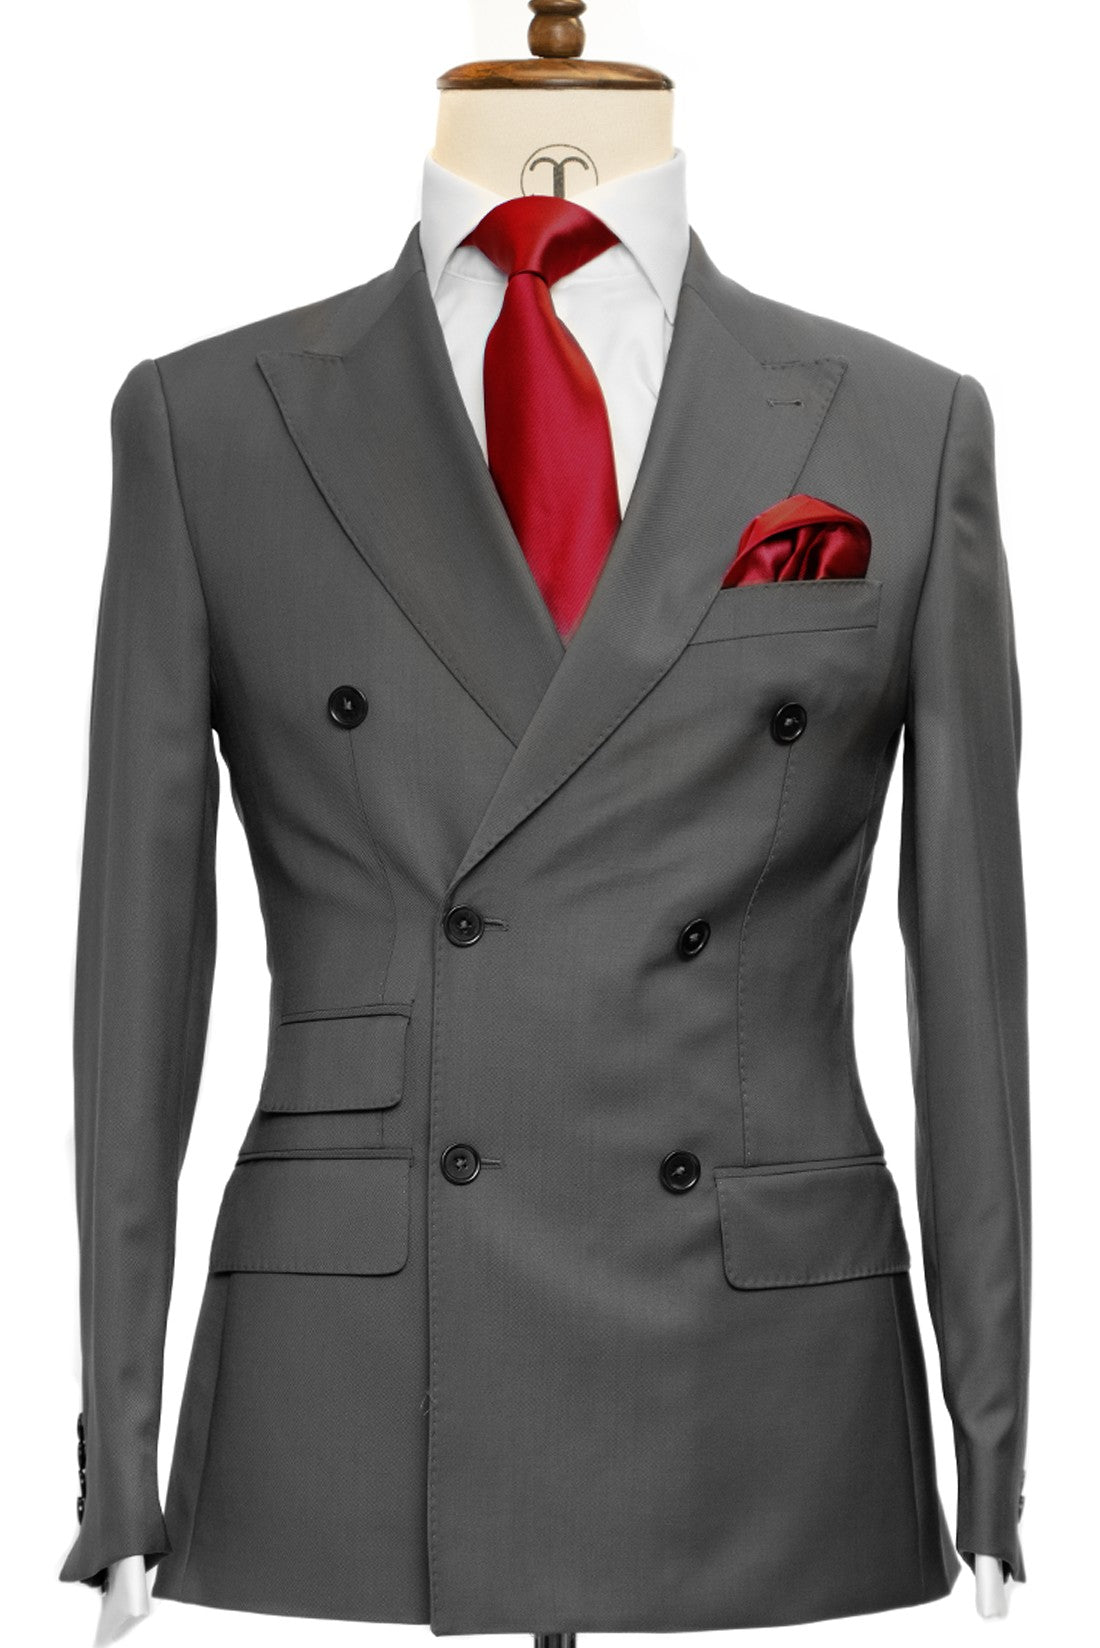 Fintura Felice - Steel Grey 2-piece double breasted suit.